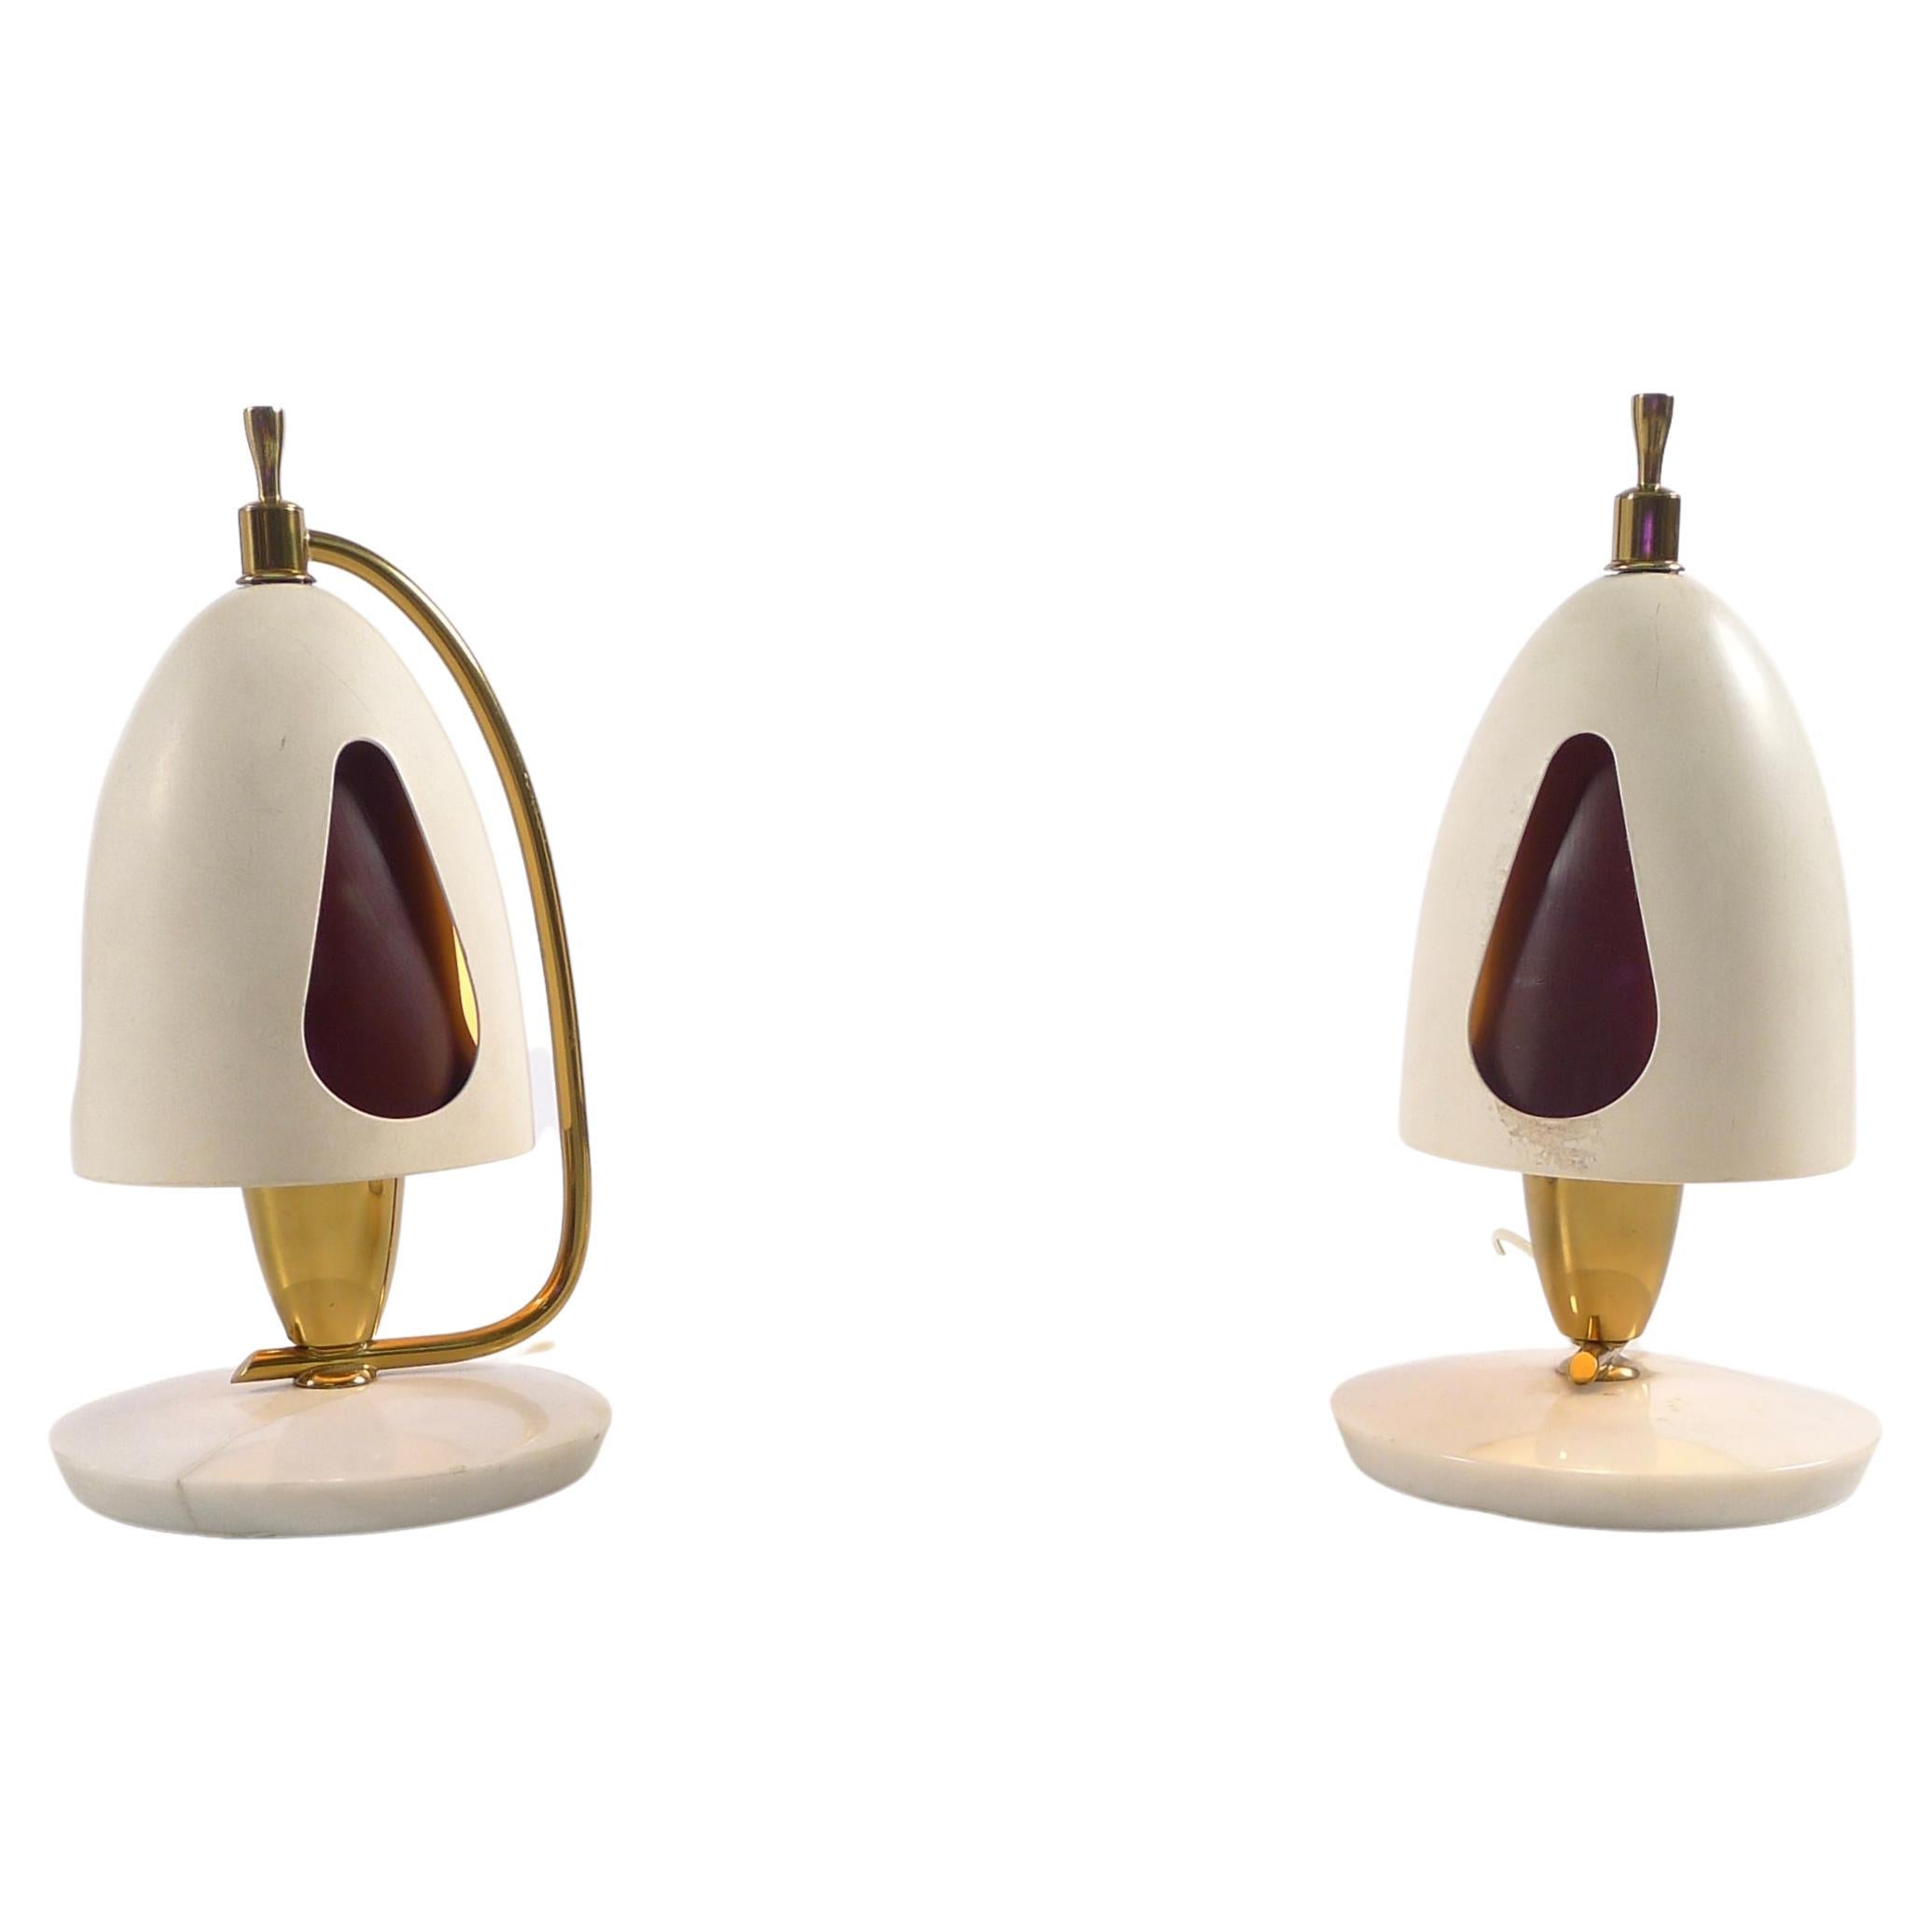 Angelo Lelii for Arredoluce, Pair of Italian table lamps, model 12398, 1952 For Sale